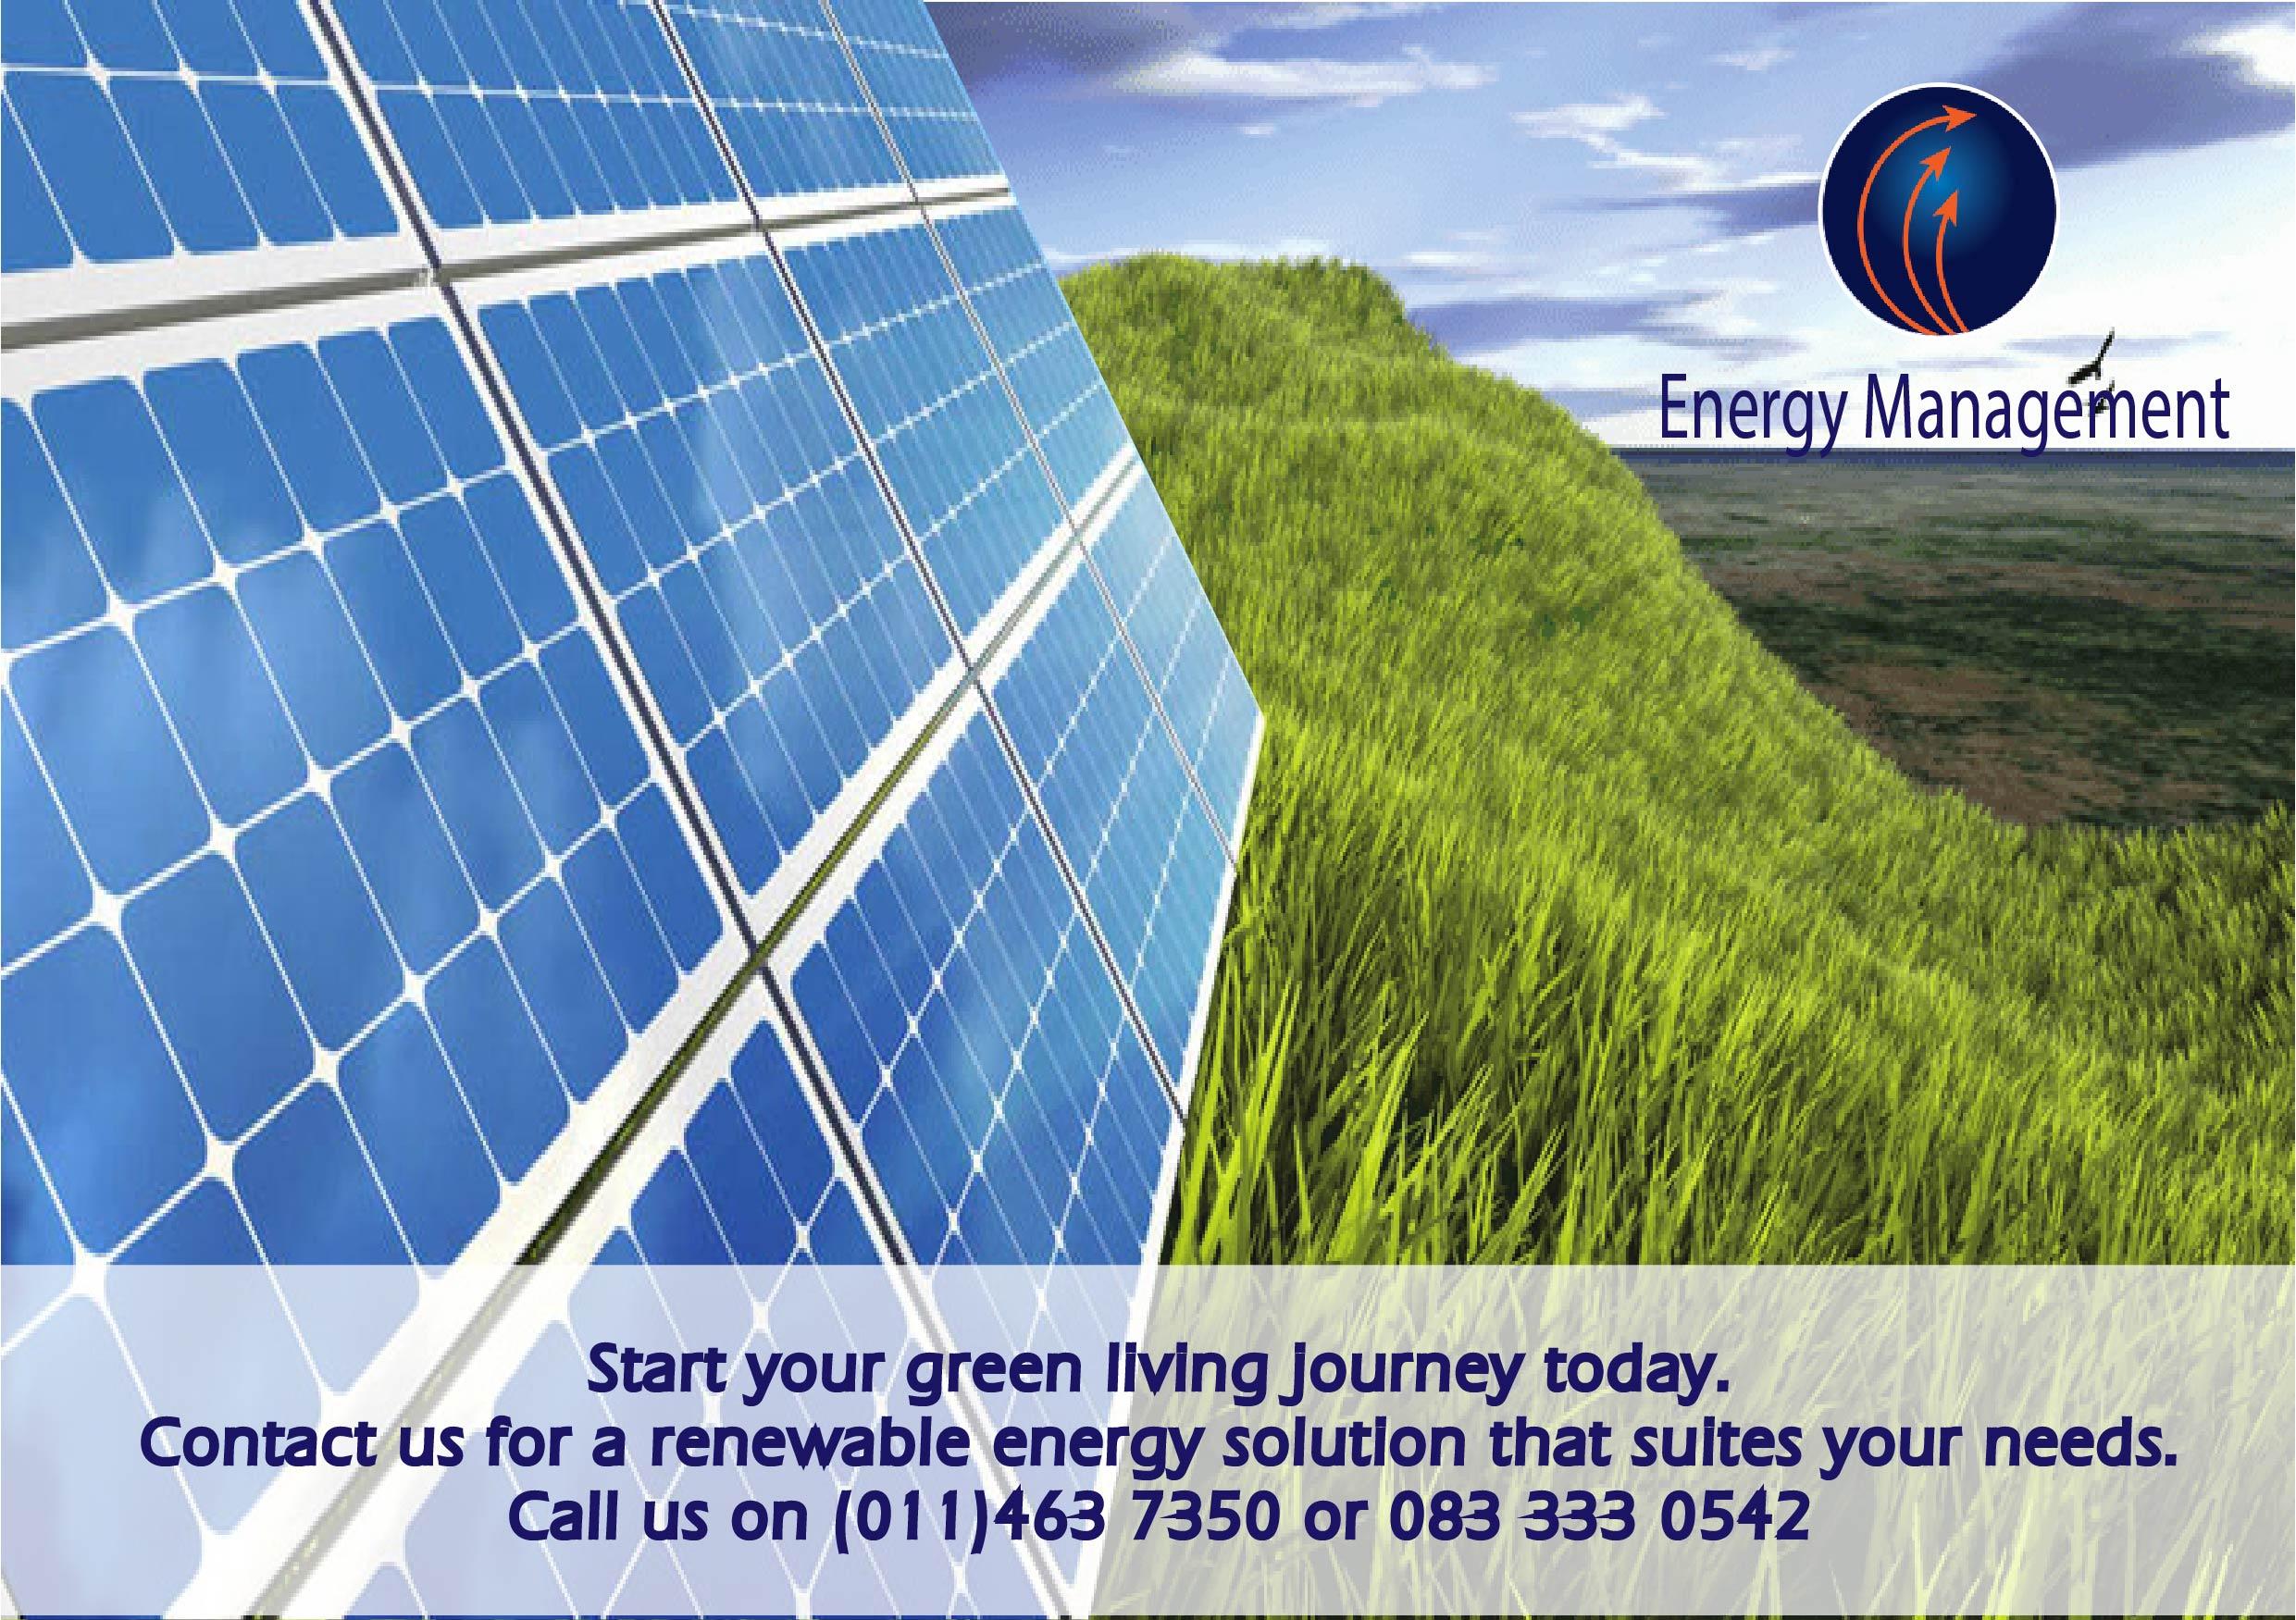 Product Renewable Energy Solutions - Energy Management SA image